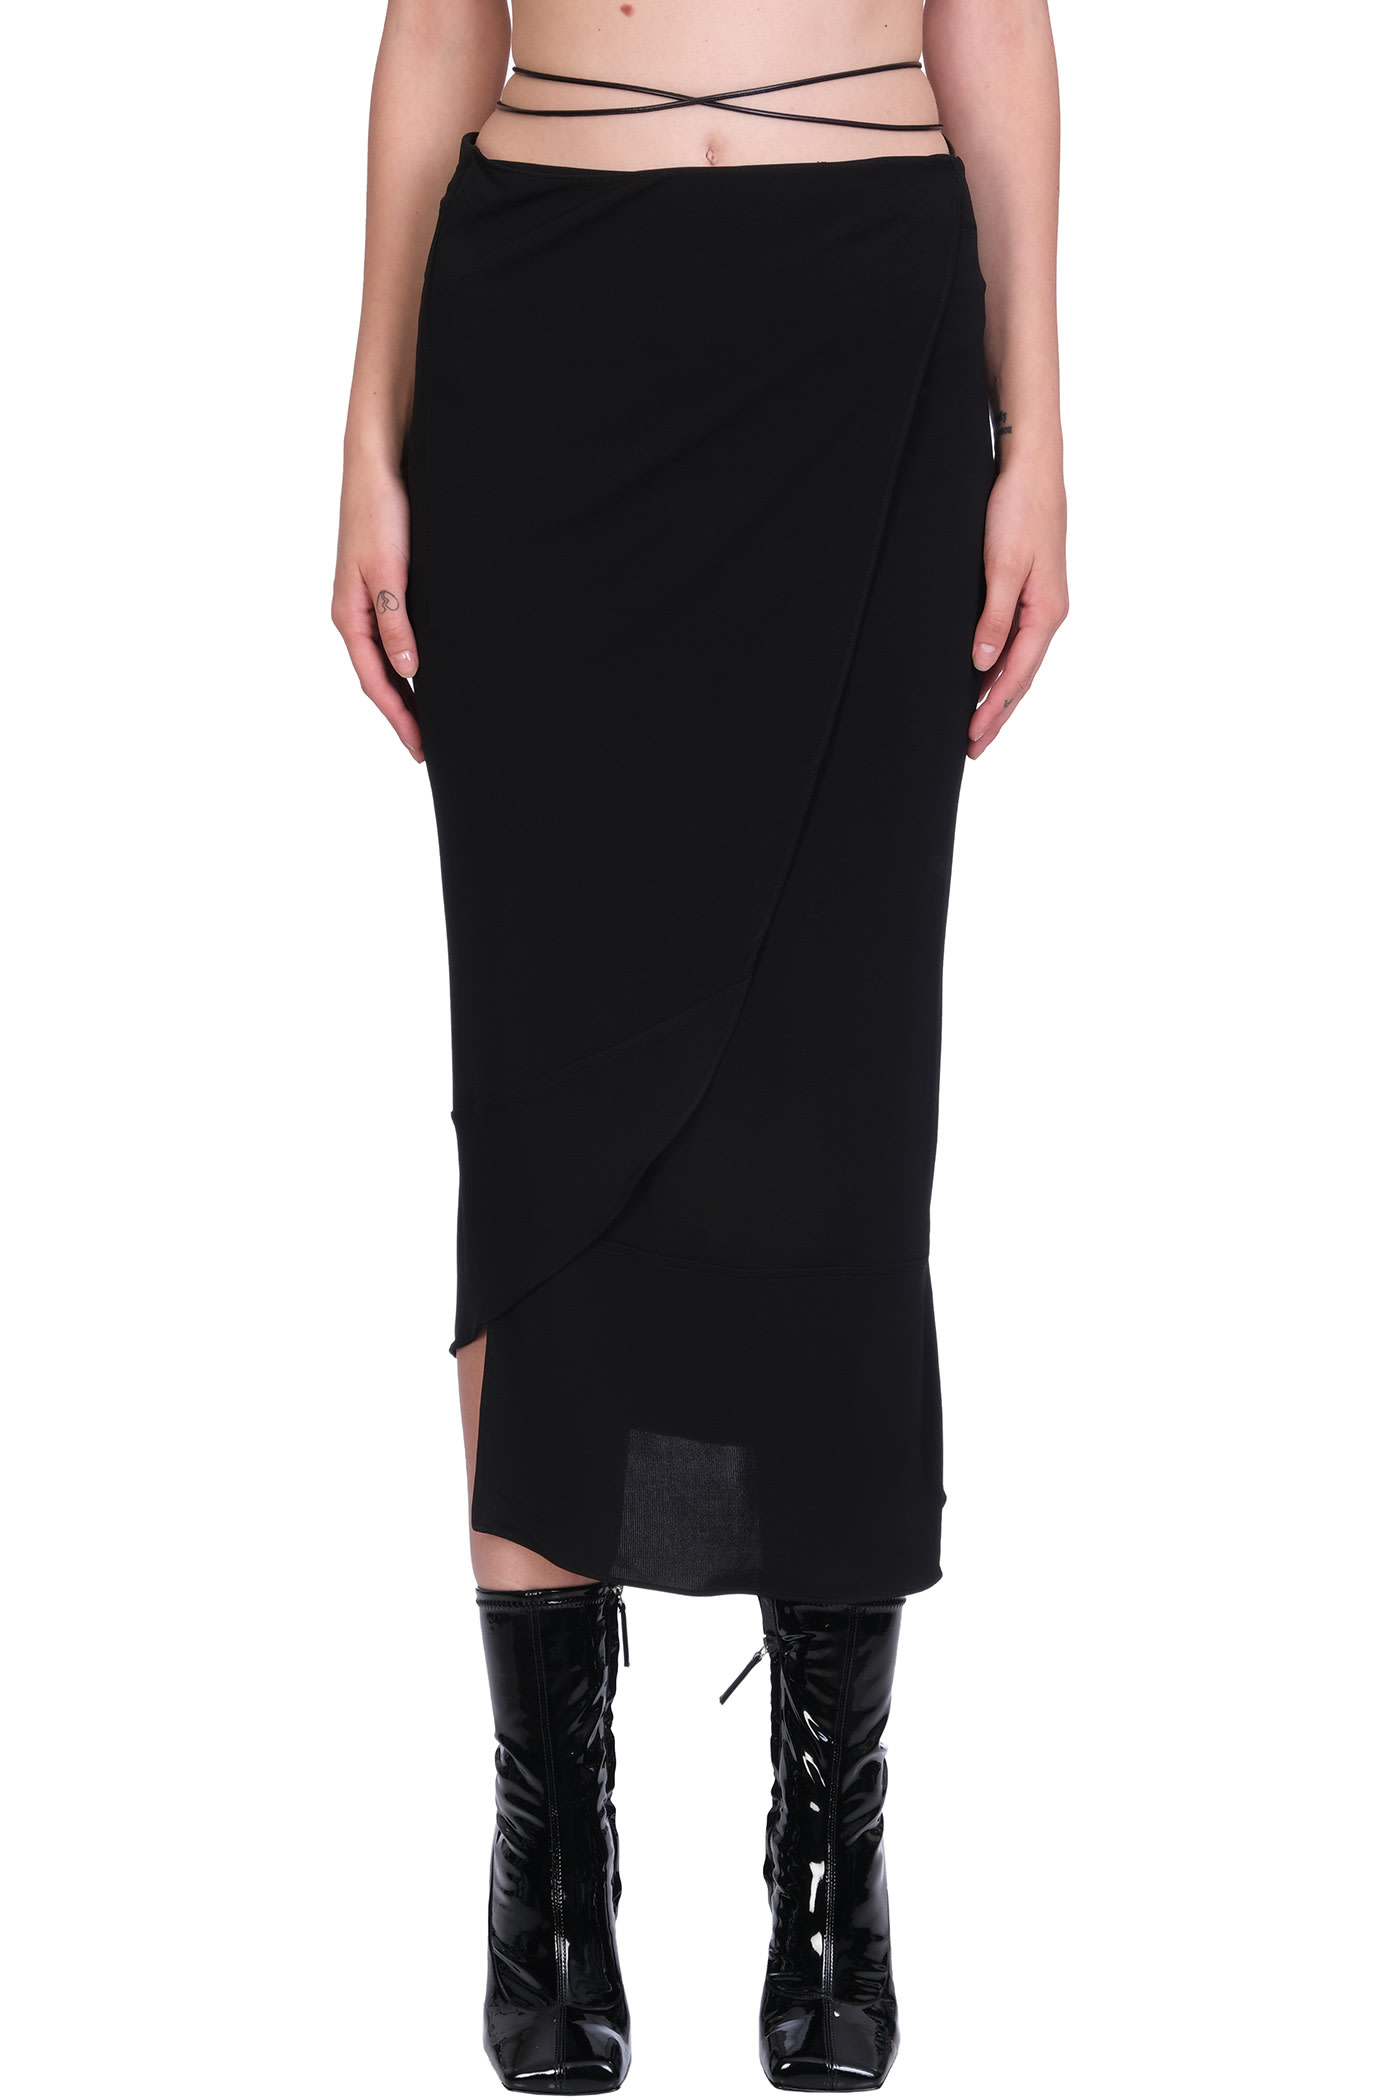 Helmut Lang Skirt In Black Viscose